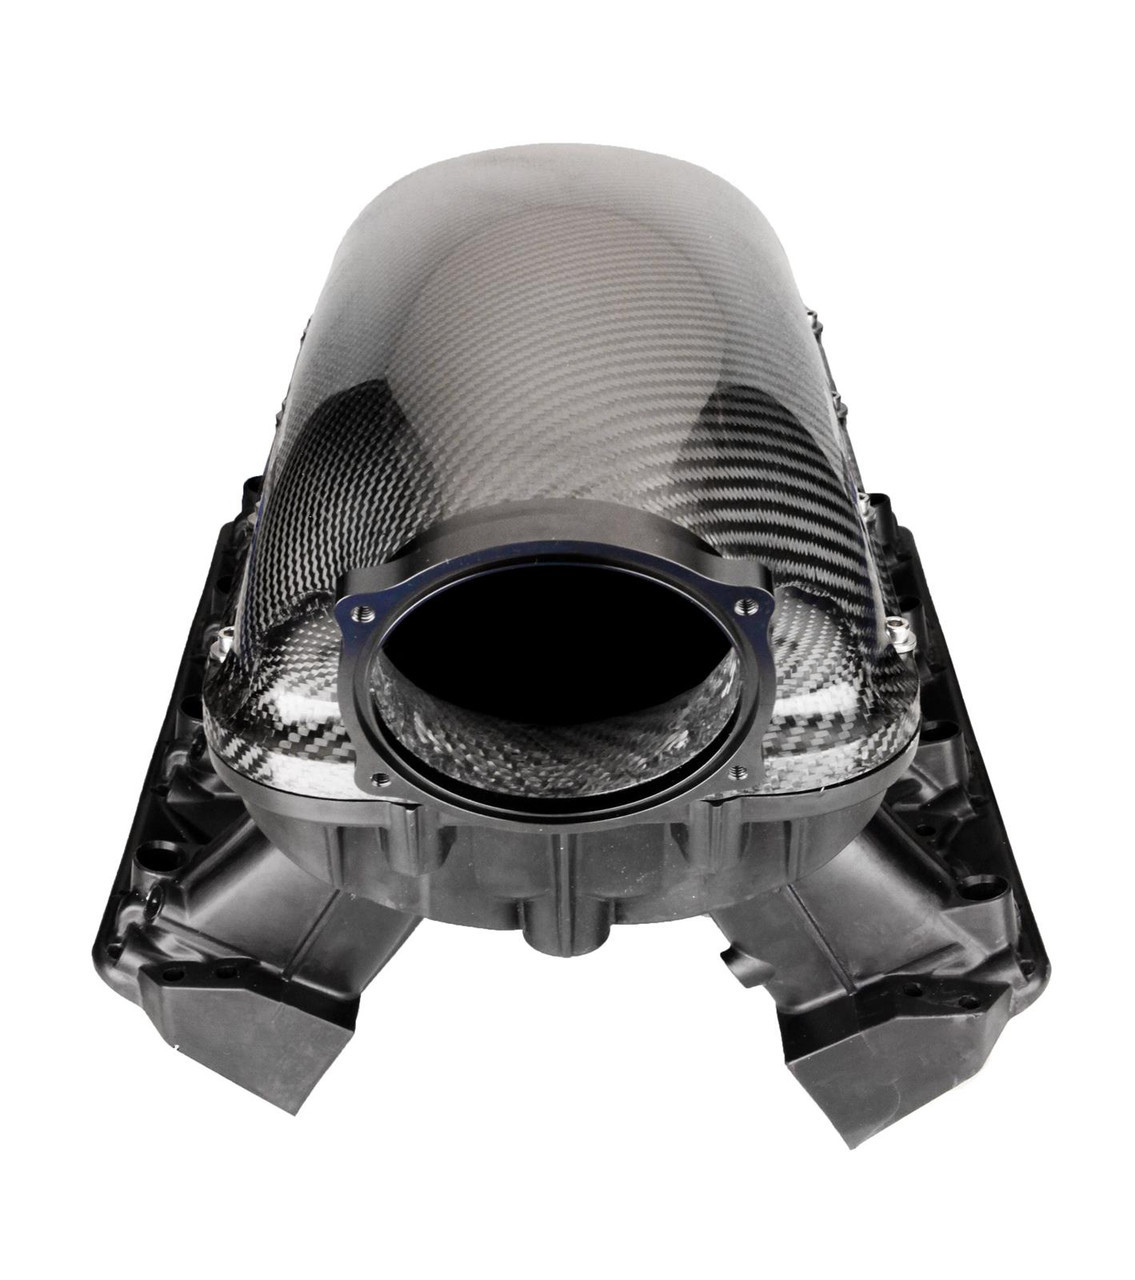 Performance Design Carbon pTR LS3 Intake Manifold for Rectangle Port LS Engines L99 LSA L76 L77 L92 LY6 L96 L94 L9H - Black Flange